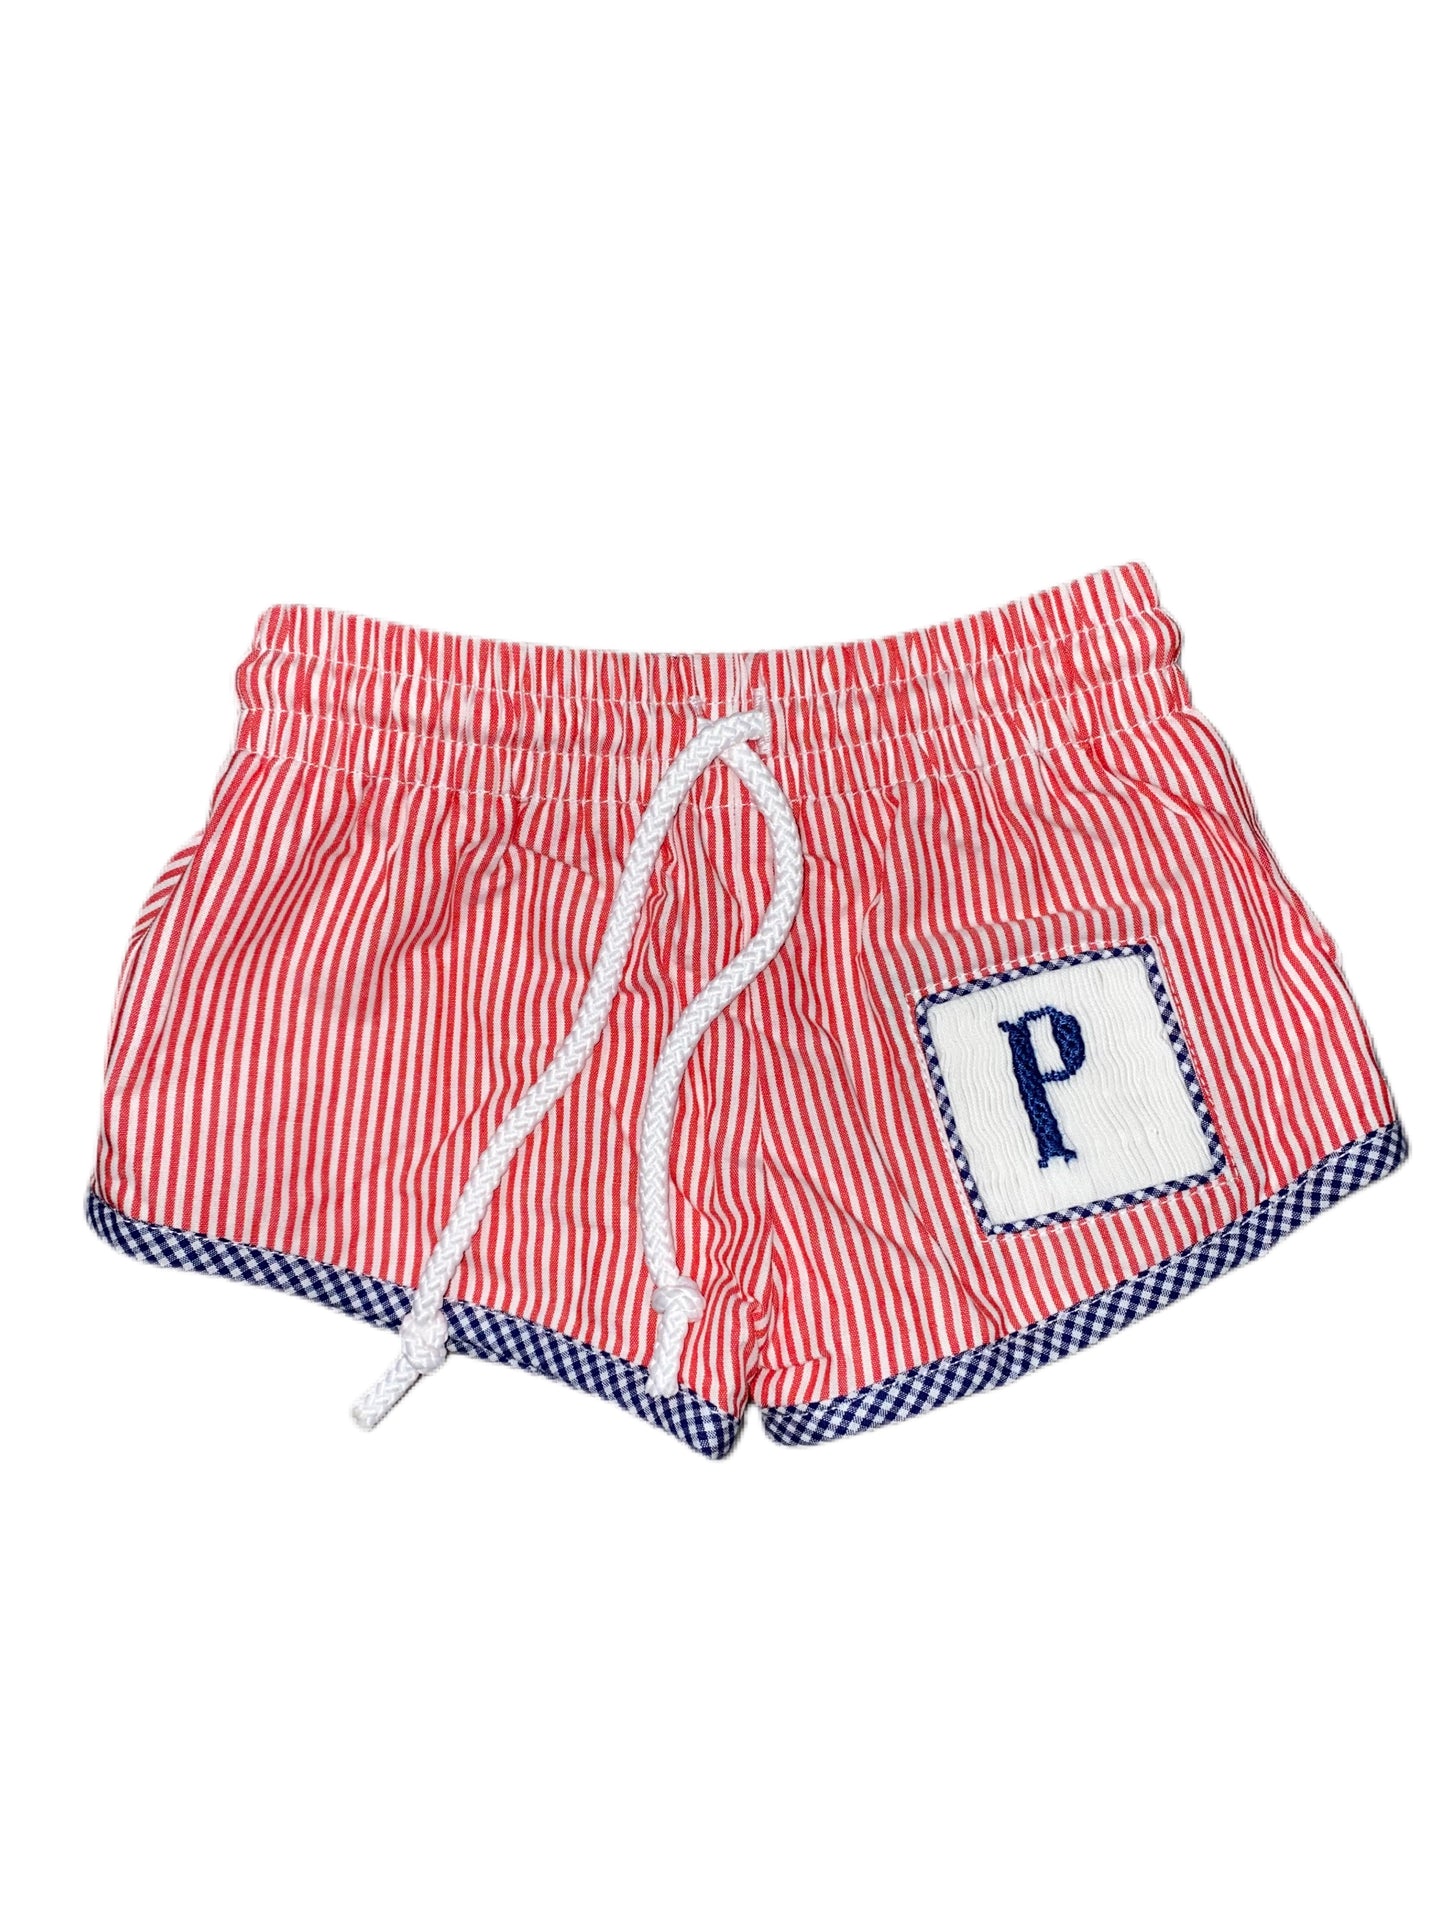 RTS: Boys Patriotic Swim Collection- Name Smock Initial Super Shortie Swim Shorts “P”